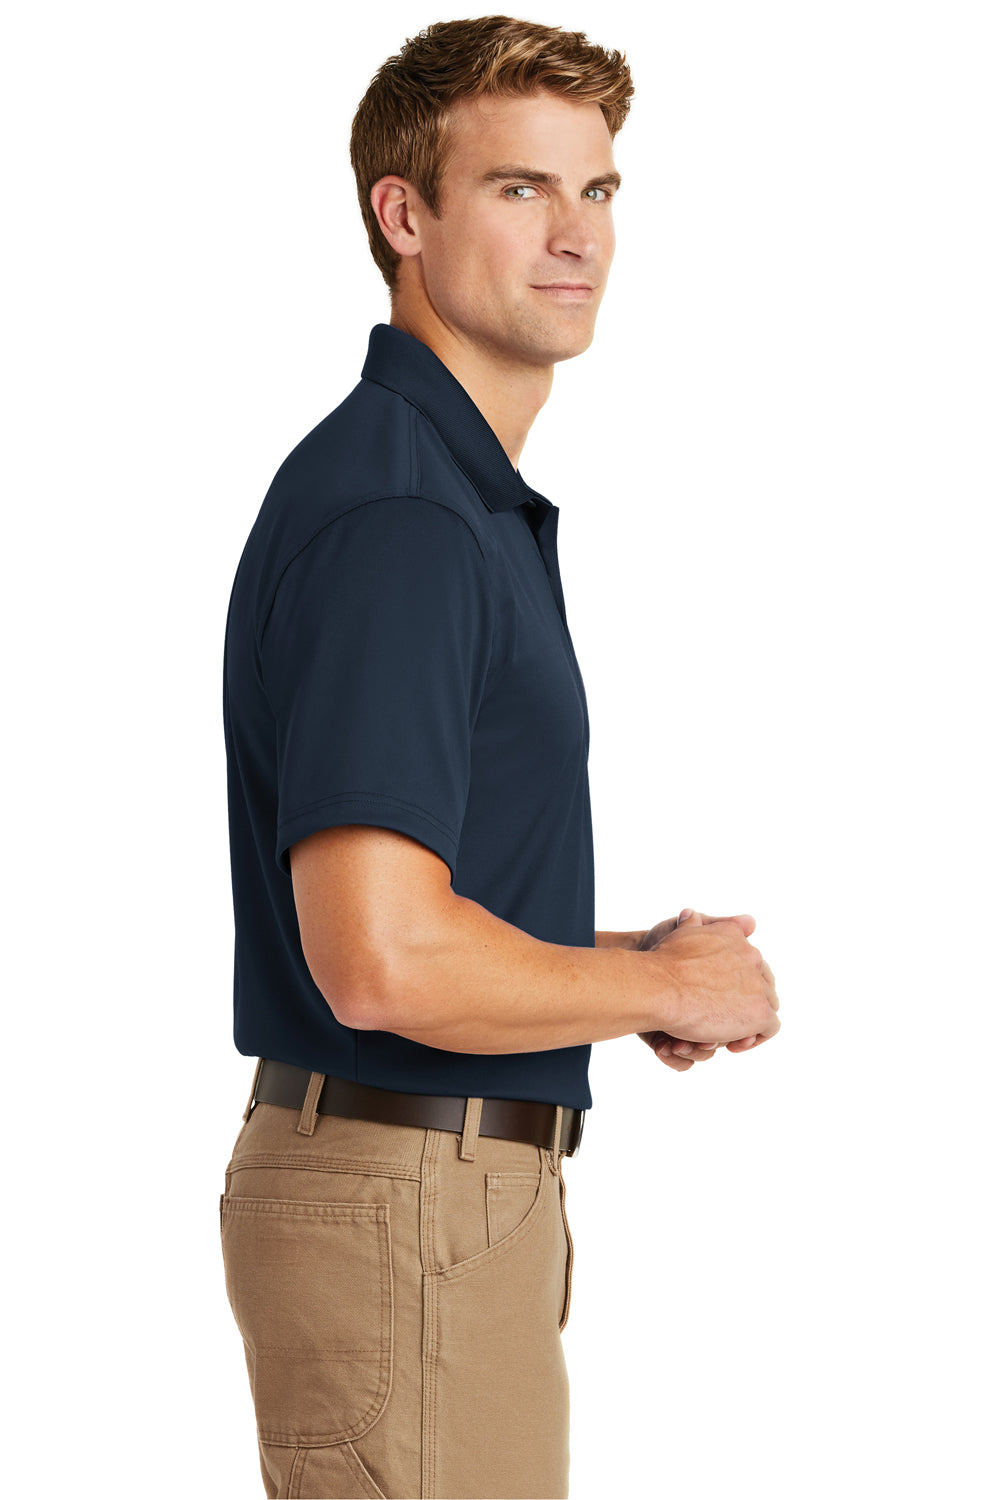 CornerStone CS412 Mens Select Moisture Wicking Short Sleeve Polo Shirt Navy Blue Side